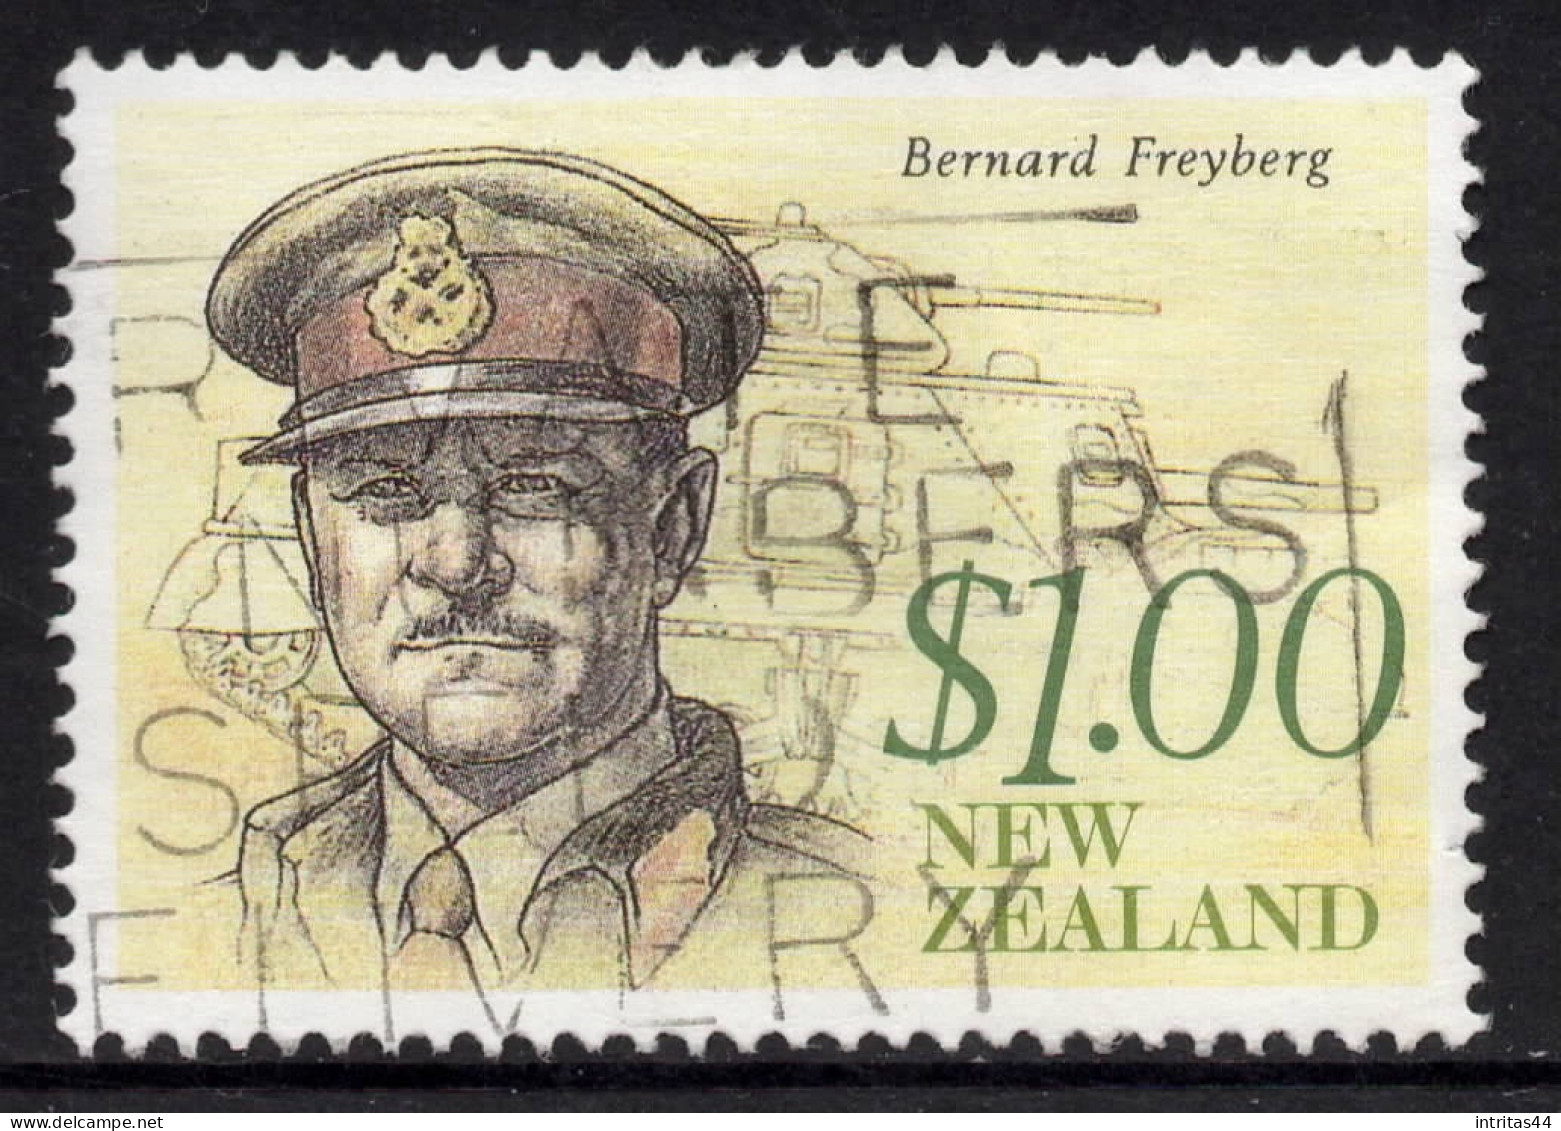 NEW ZEALAND 1990 HERITAGE-THE ACHIEVERS  $1.00 " FREYBERG "  STAMP VFU - Gebraucht